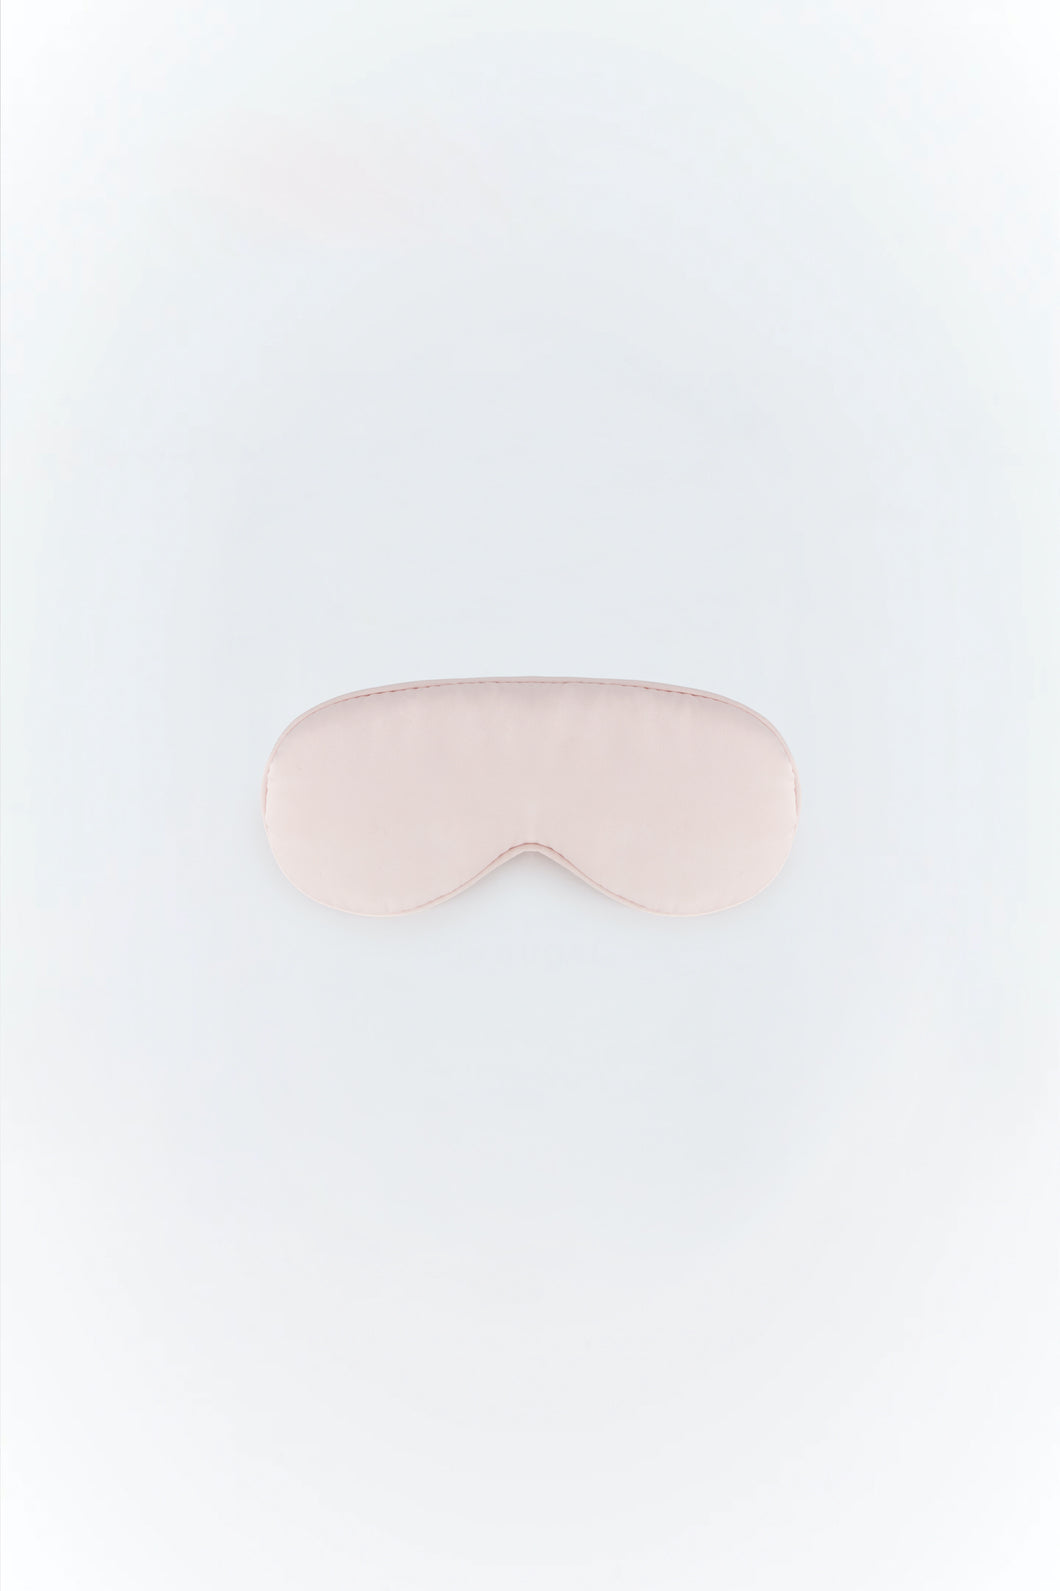 Luxe Eye Mask - Blush